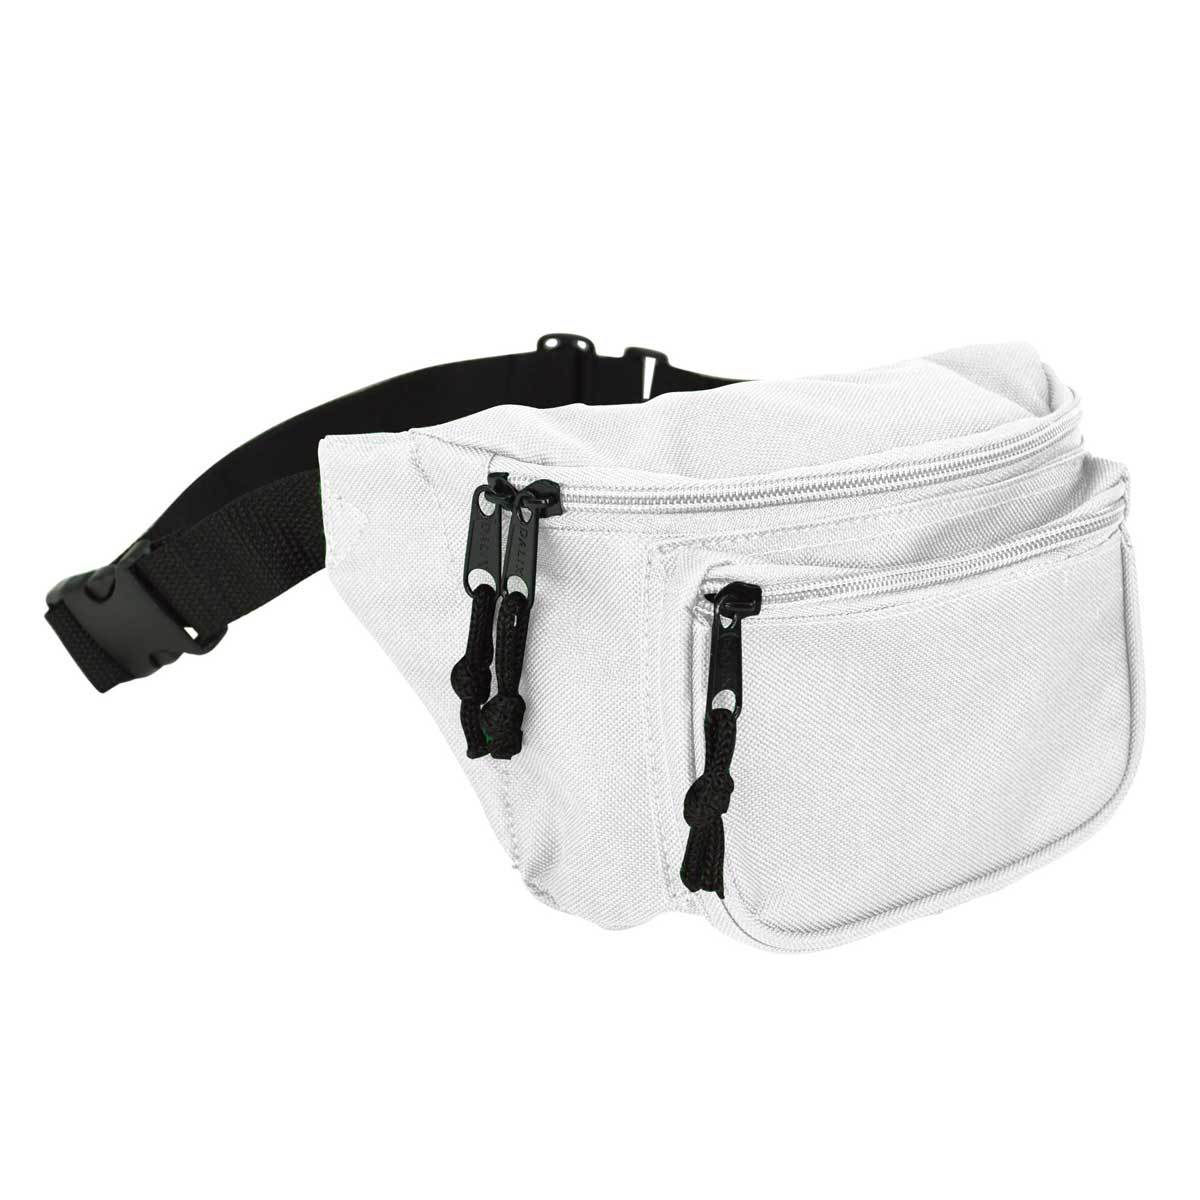 DALIX Fanny Pack 7" Travel Belt Pouch Waist Wallet Bag w/ 3 Pockets FP-002 Fanny Packs DALIX White 